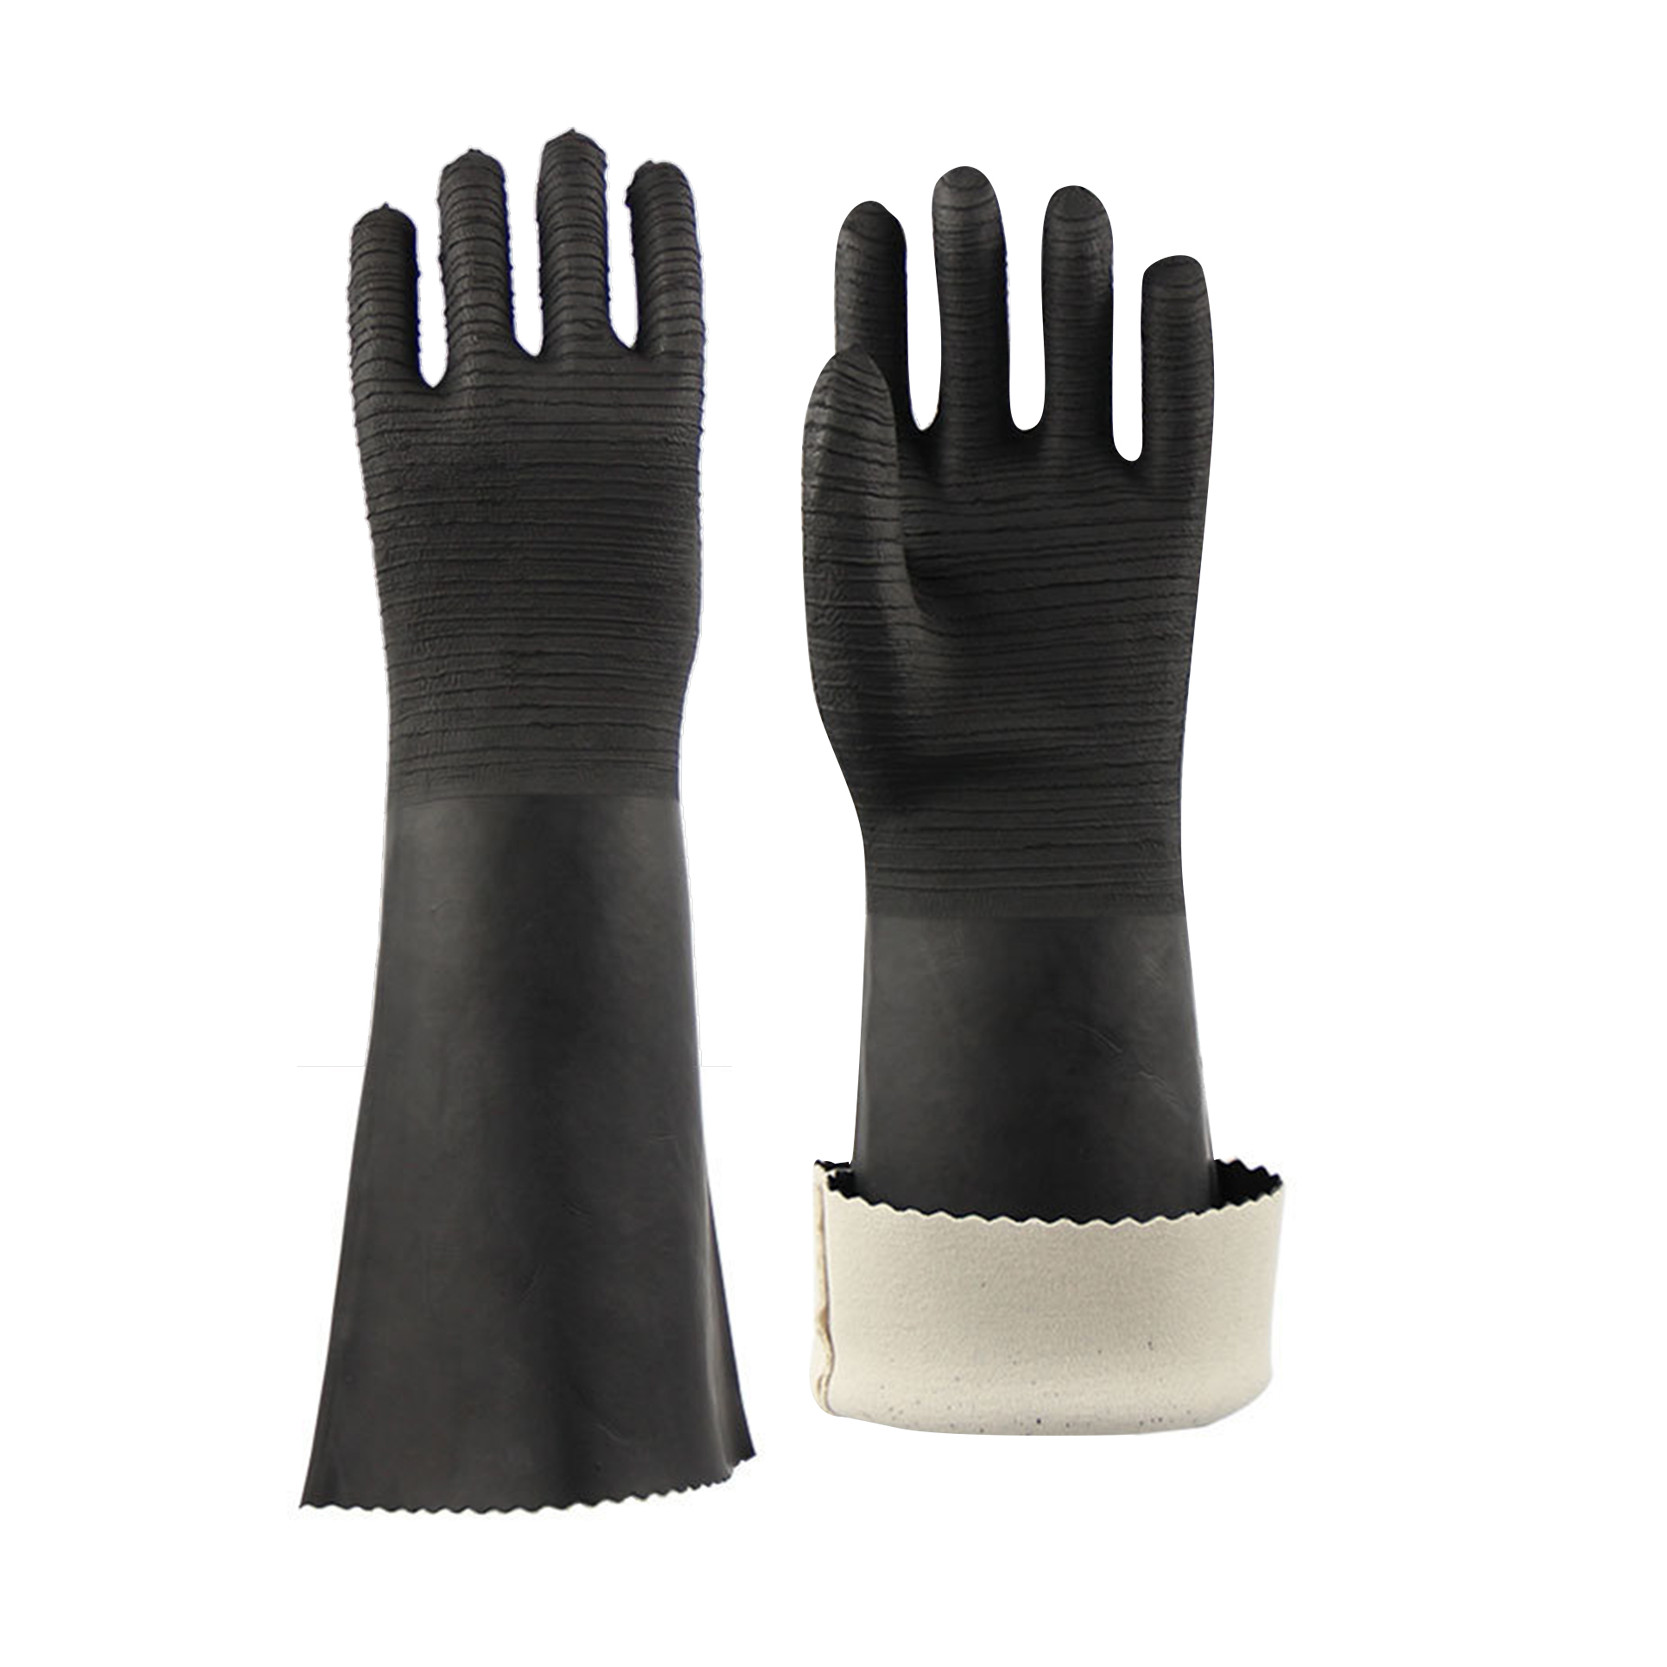 Устойчиви на химикали ръкавици, водоустойчиви почистващи защитни работни ръкавици за многократна употреба